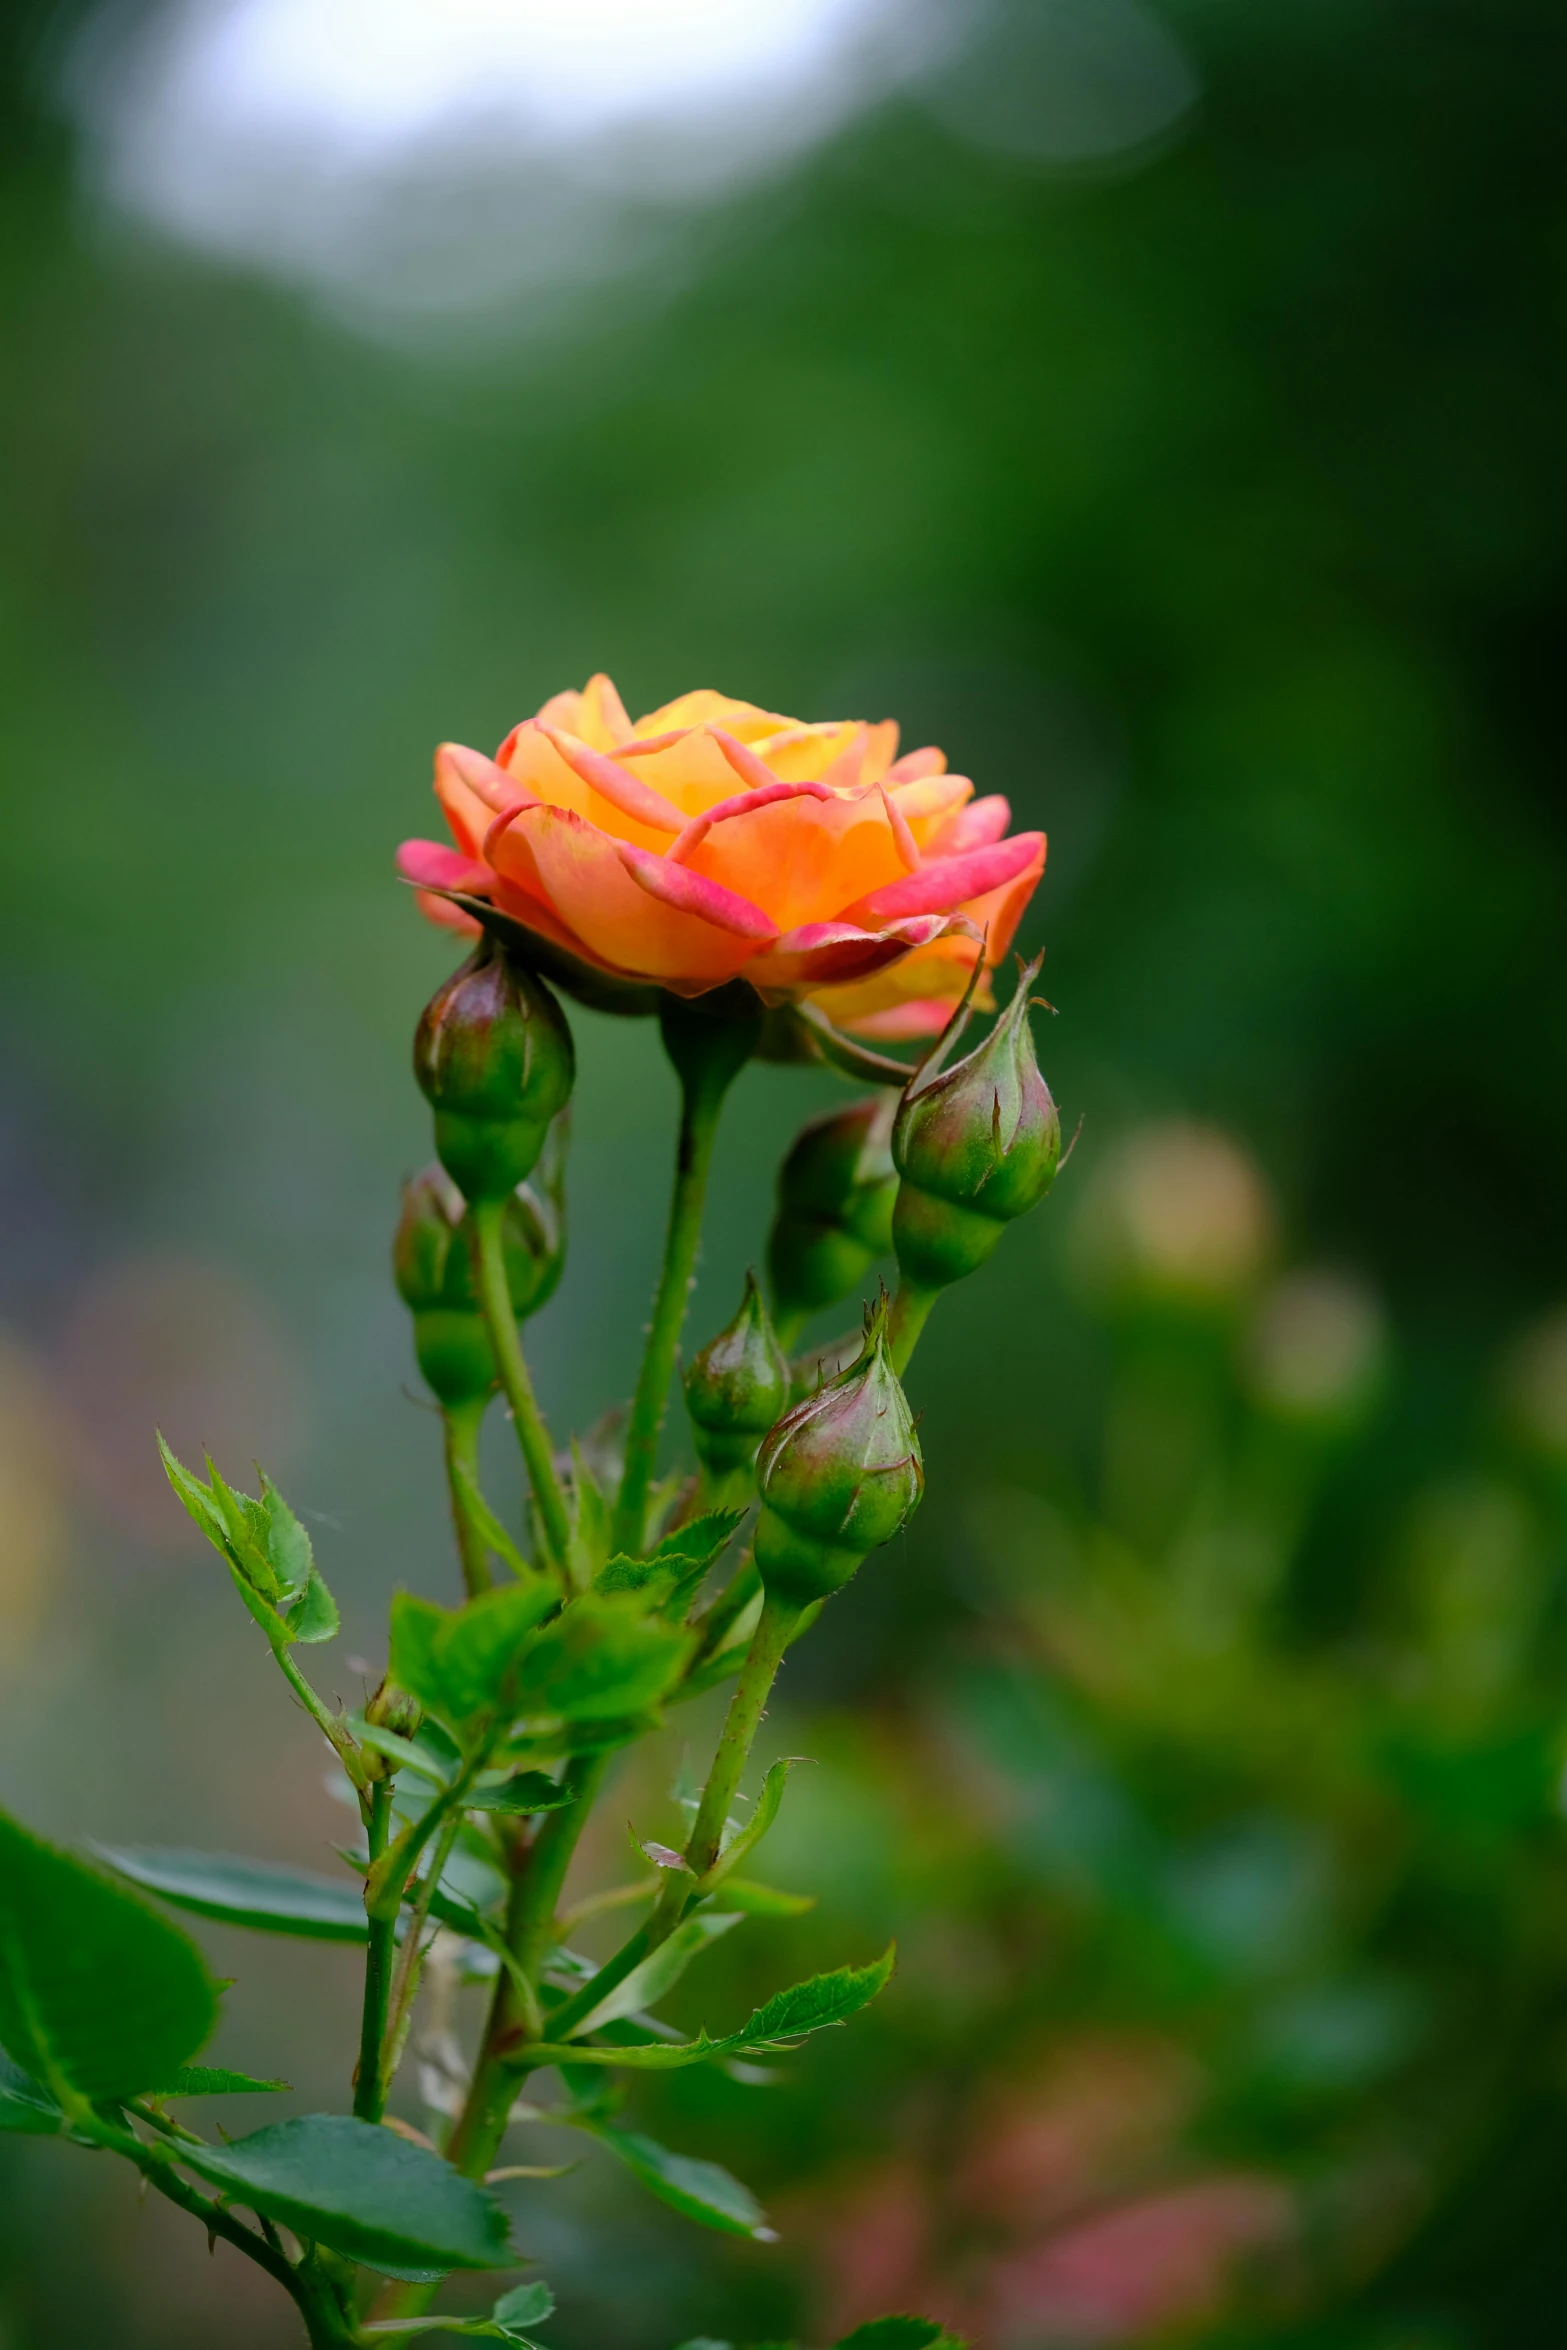 a single, pink, rose bud on a green stem